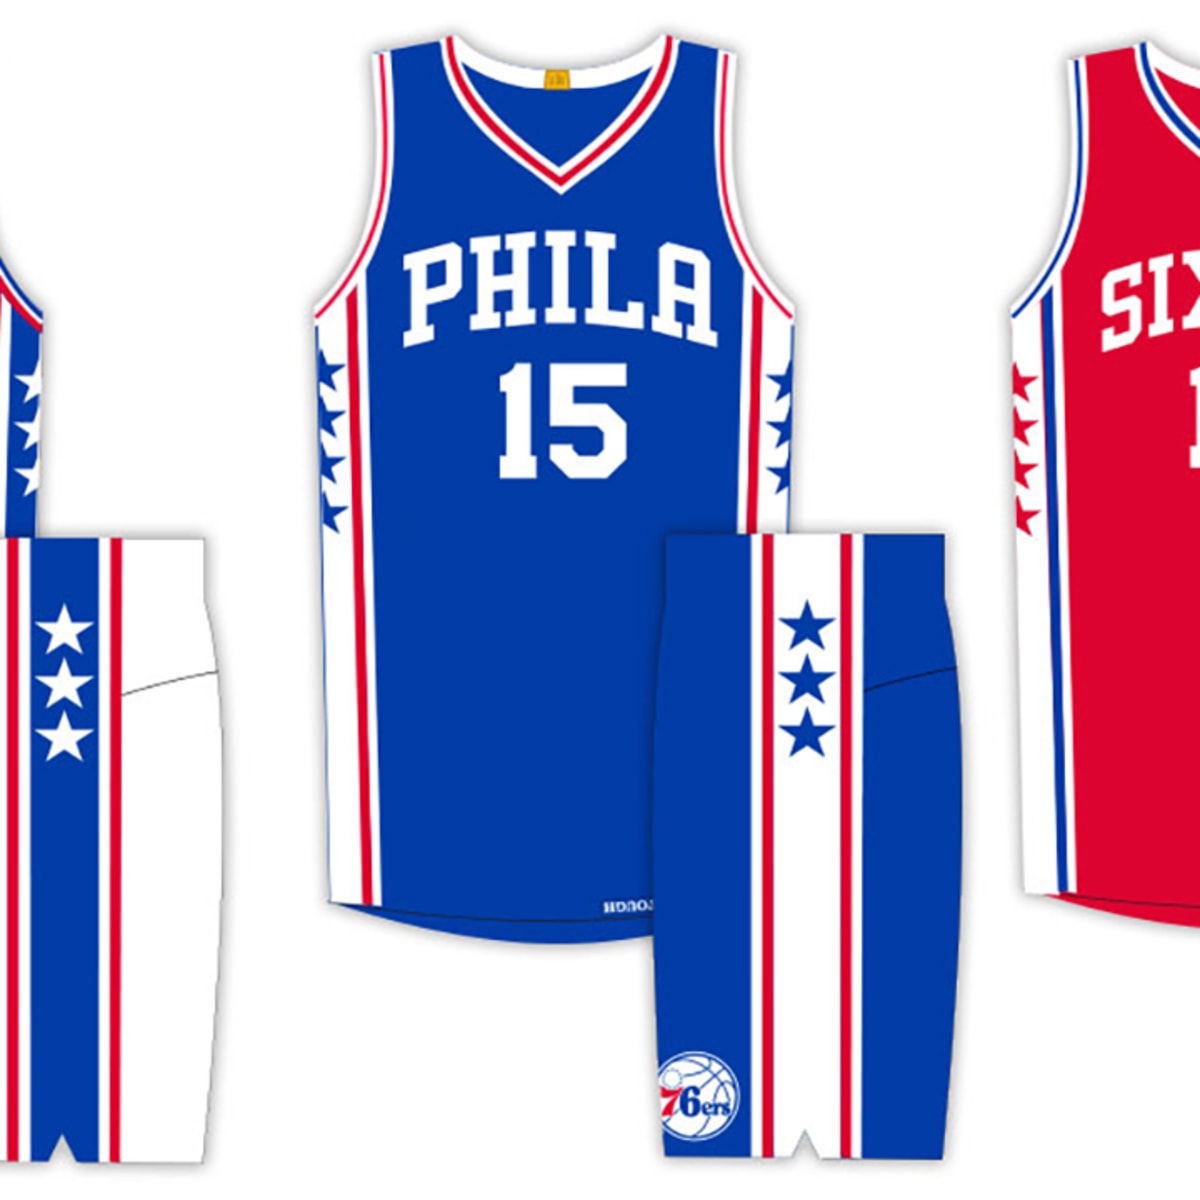 2015-16 Sixers Uniforms  76ers, Philadelphia 76ers, Sports uniforms